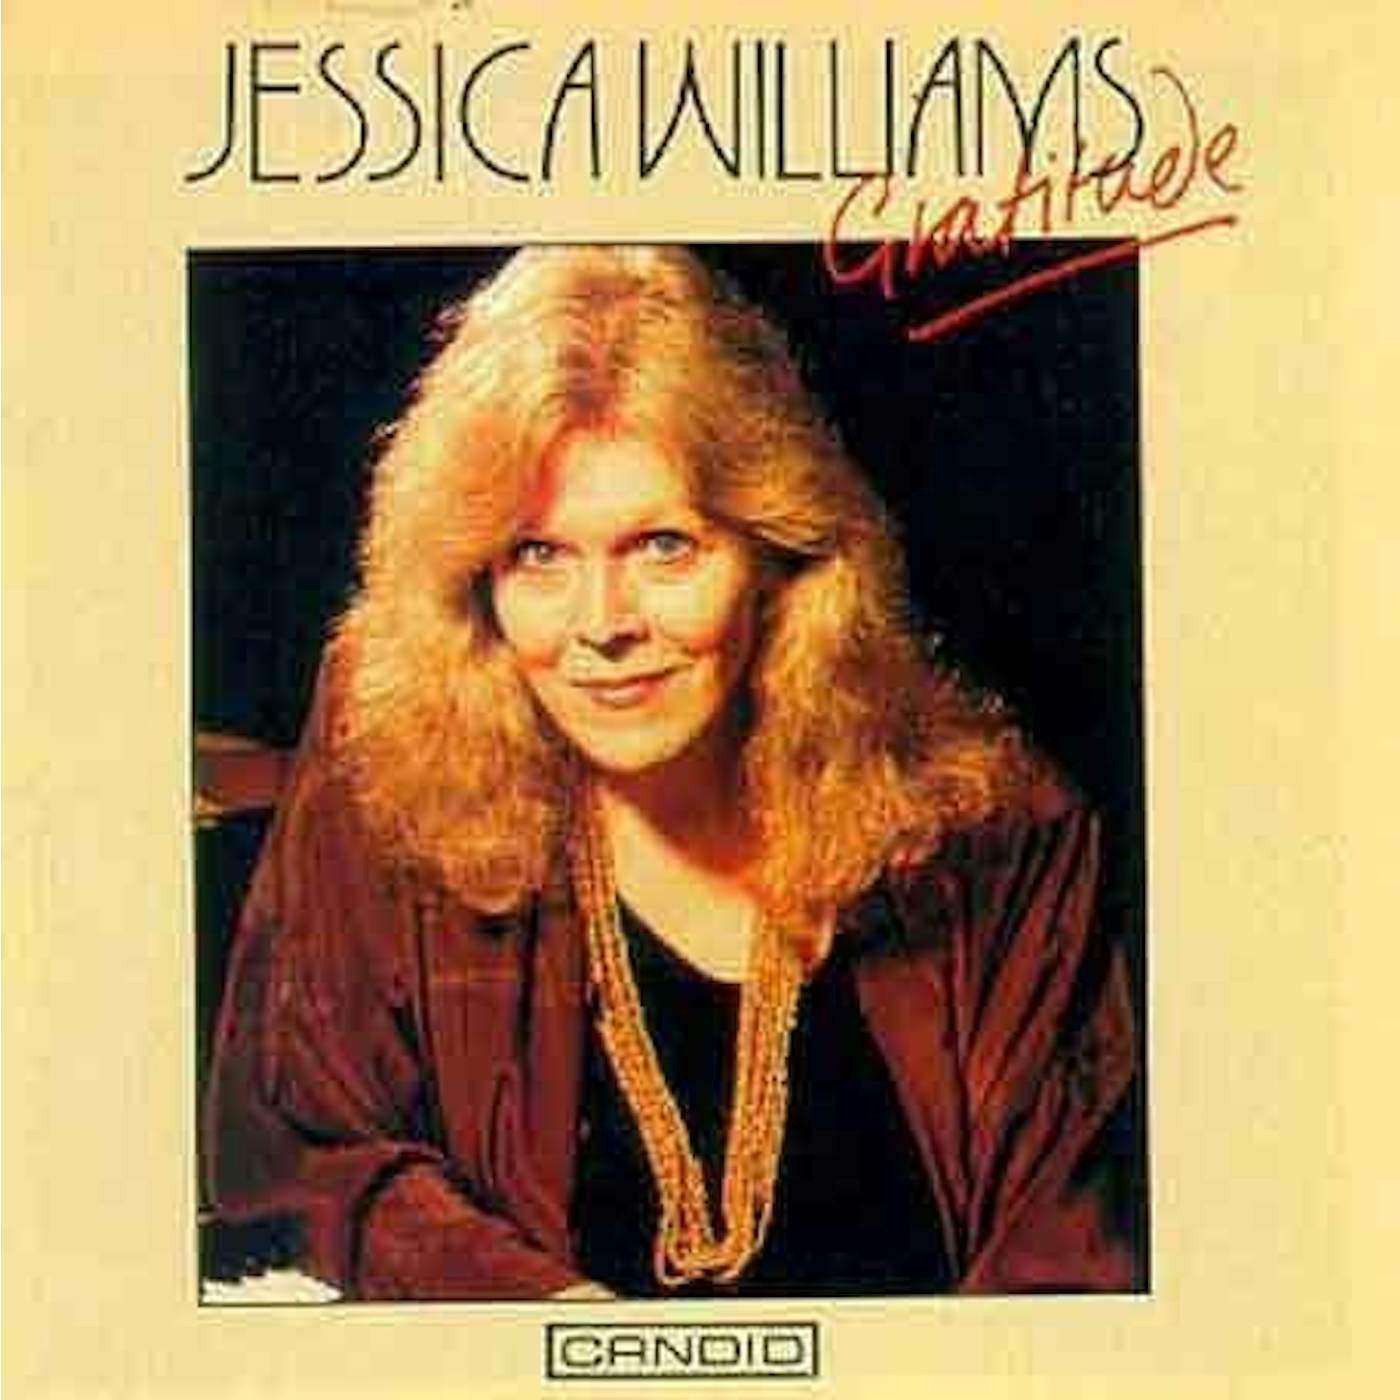 Jessica Williams GRATITUDE CD